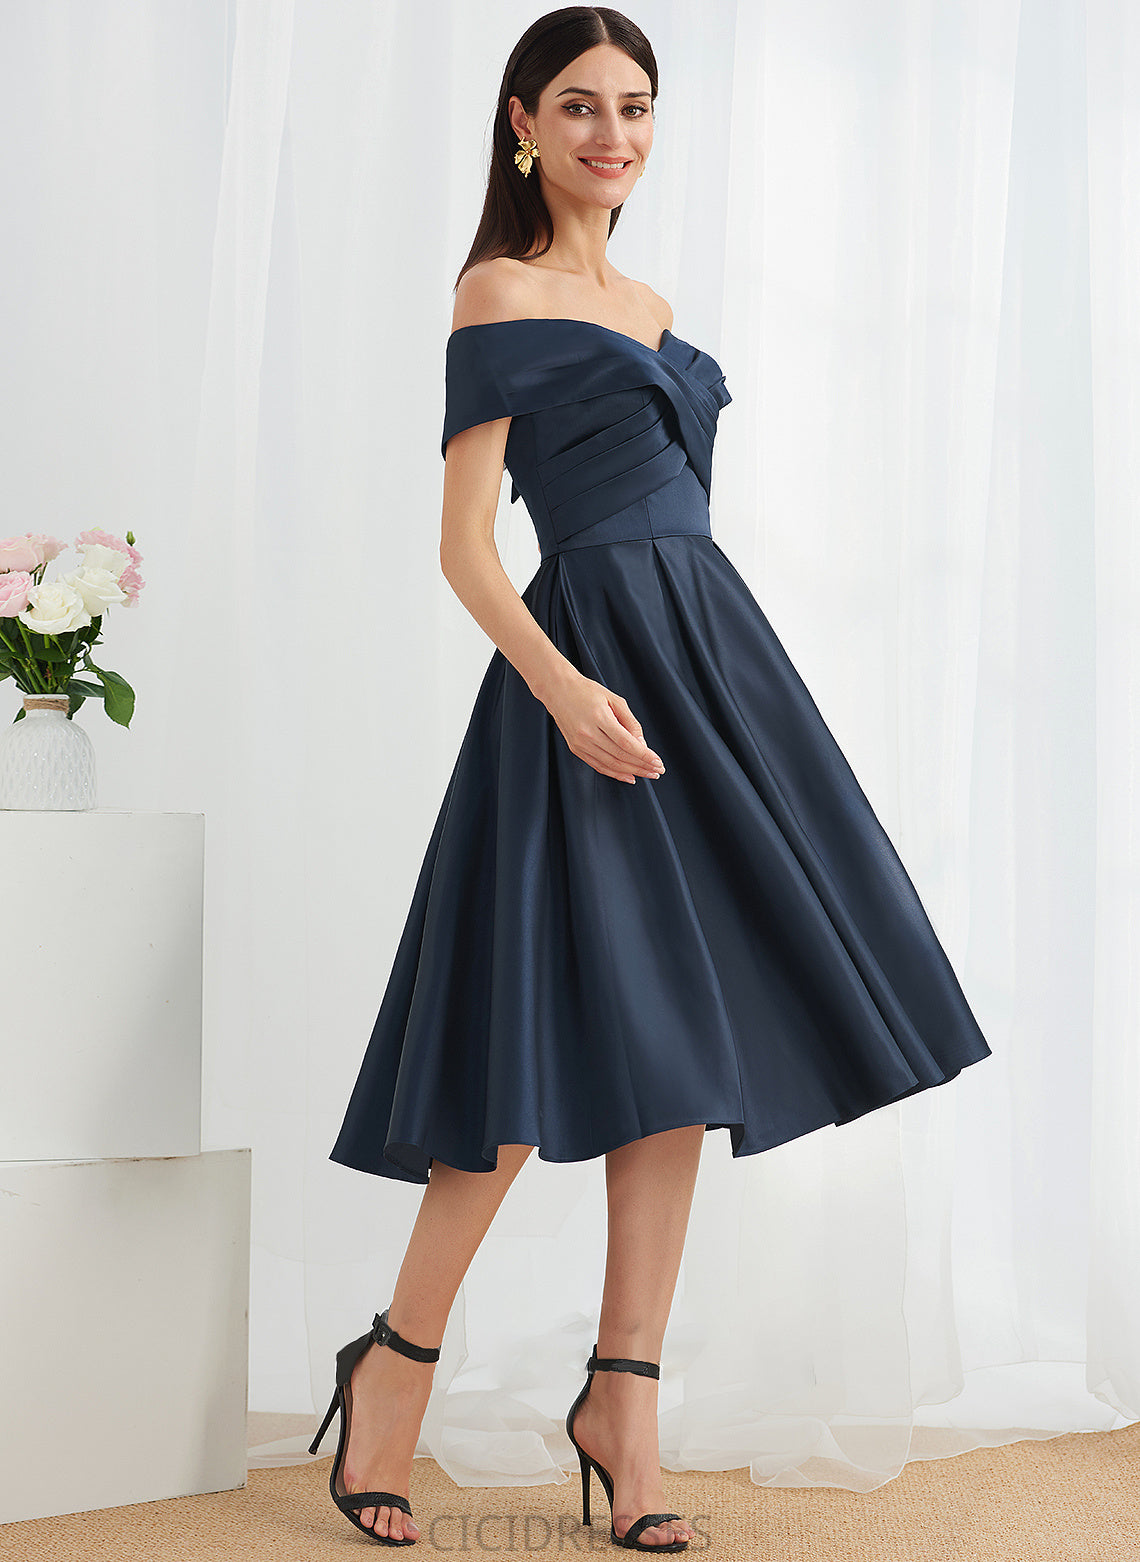 Neckline Embellishment Silhouette Knee-Length Fabric Off-the-Shoulder Pockets Length A-Line Kirsten Floor Length V-Neck Bridesmaid Dresses